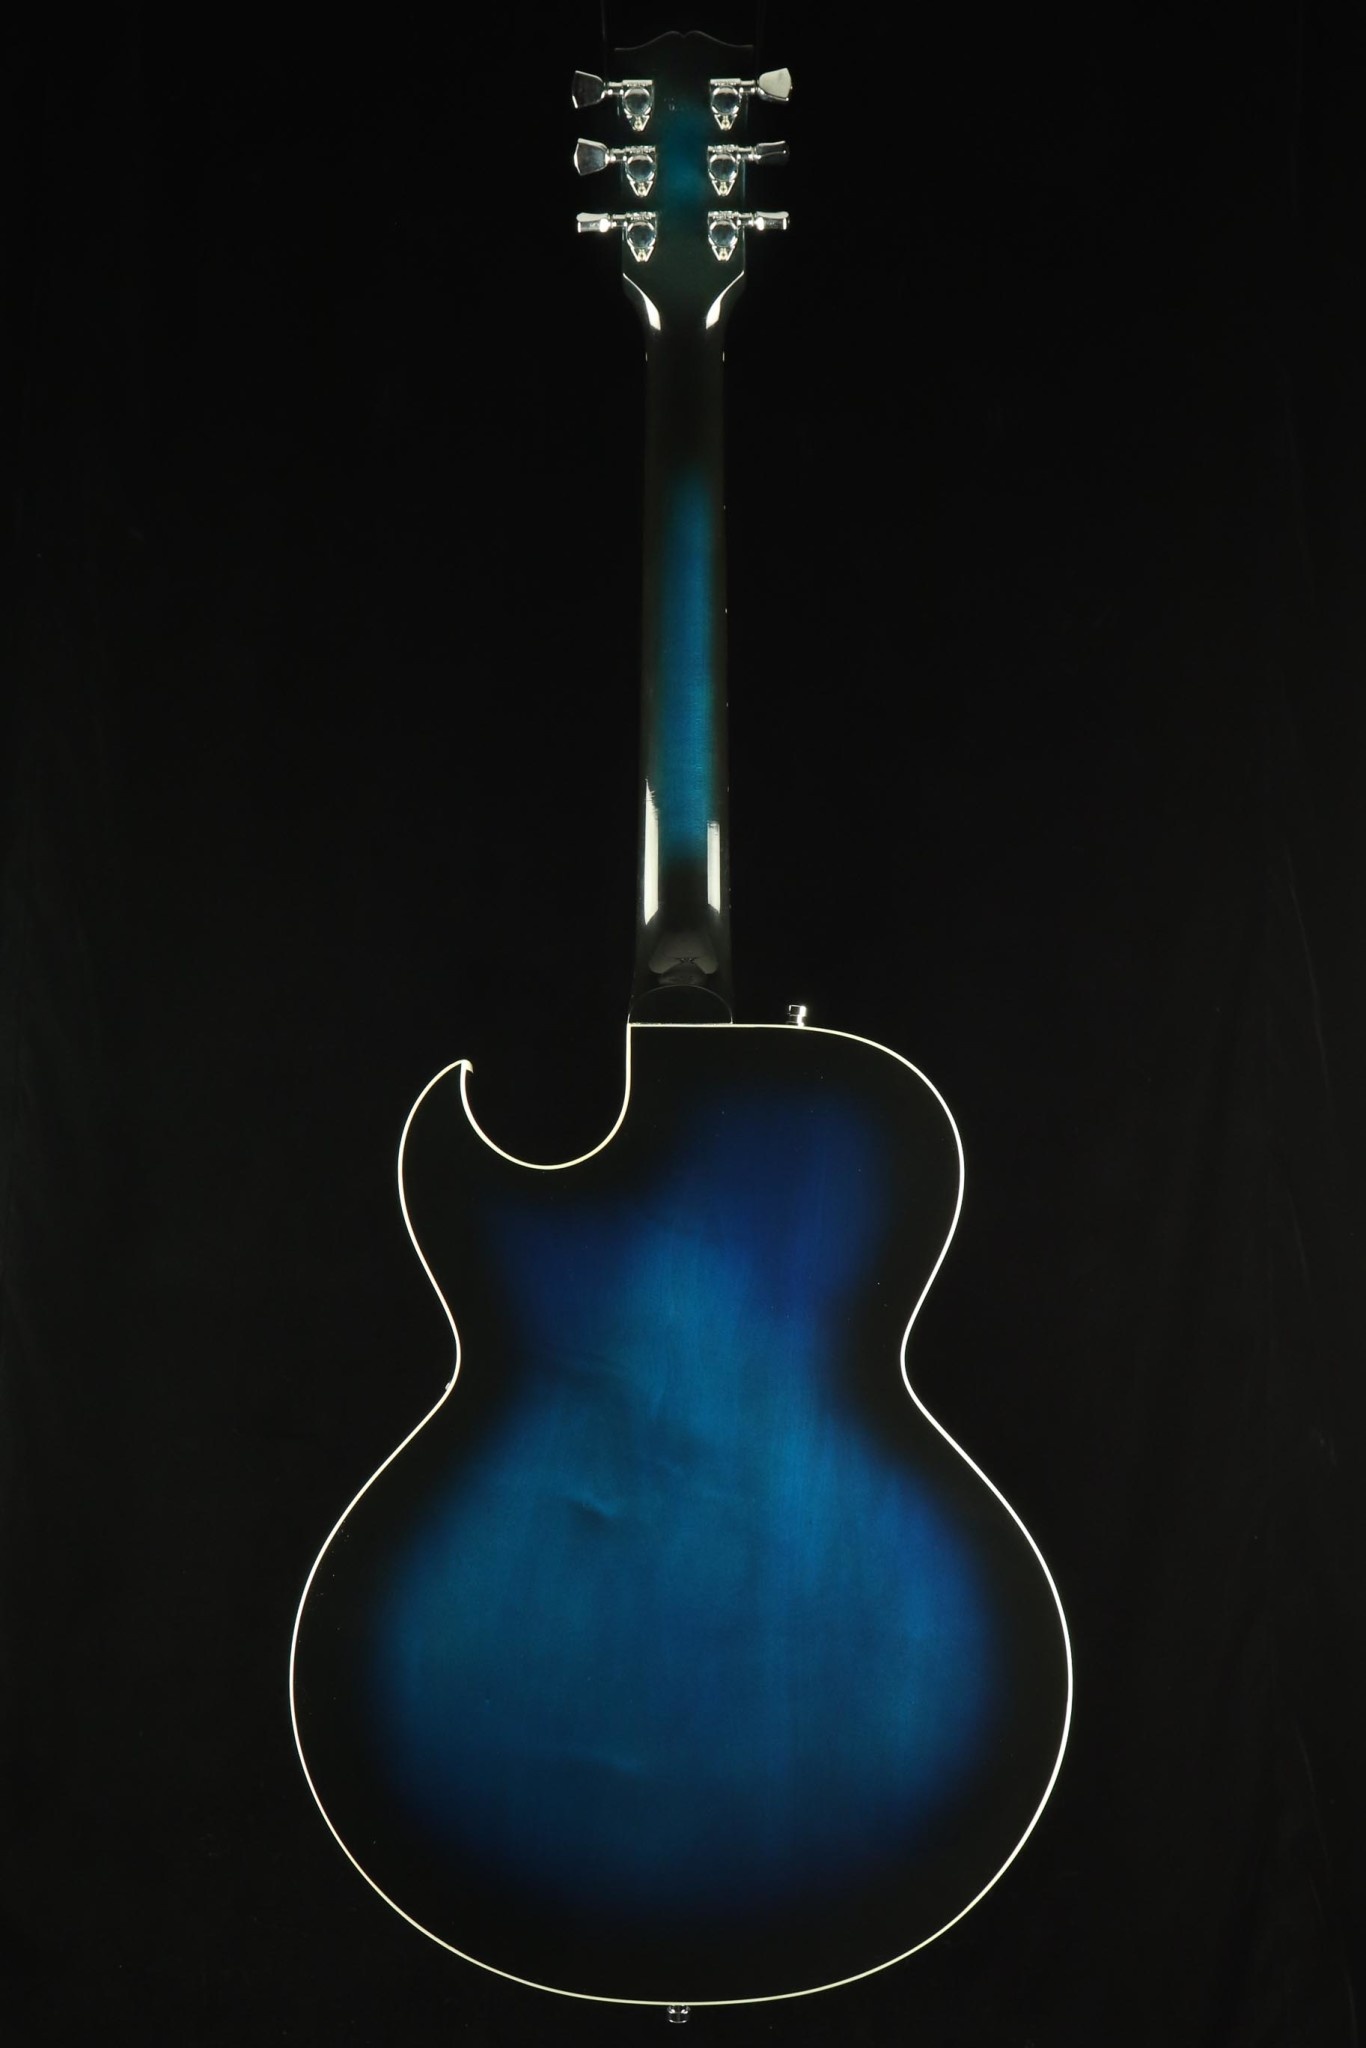 Gibson Gibson ES-135H Electric Guitar - Blues Burst